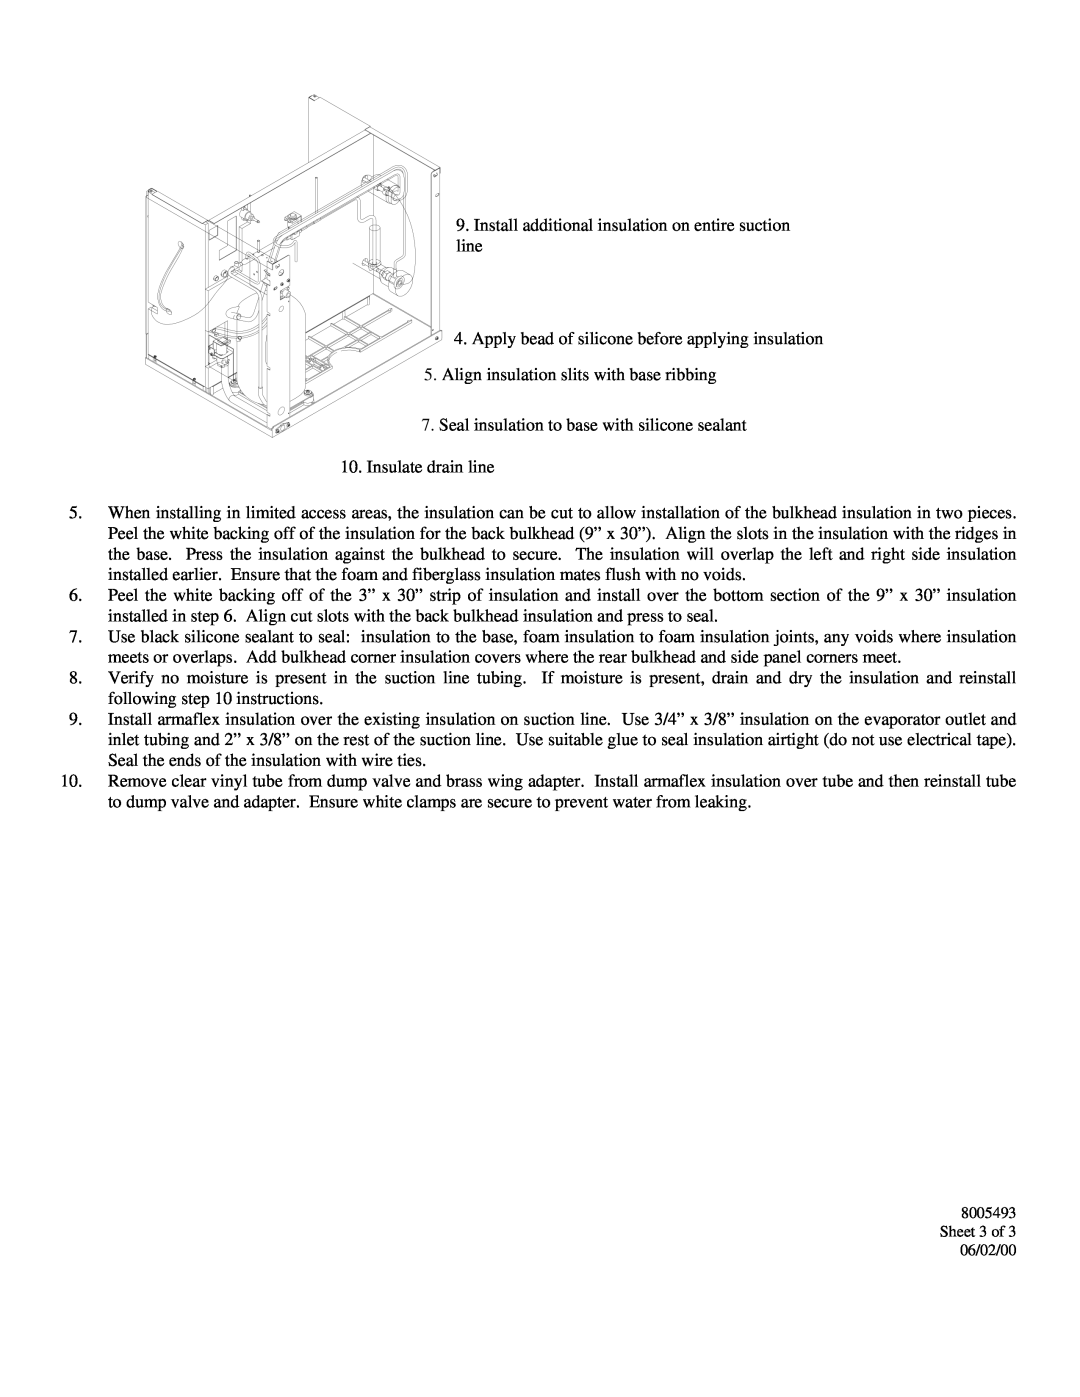 Manitowoc Ice Q-0280 installation instructions Align insulation slits with base ribbing 